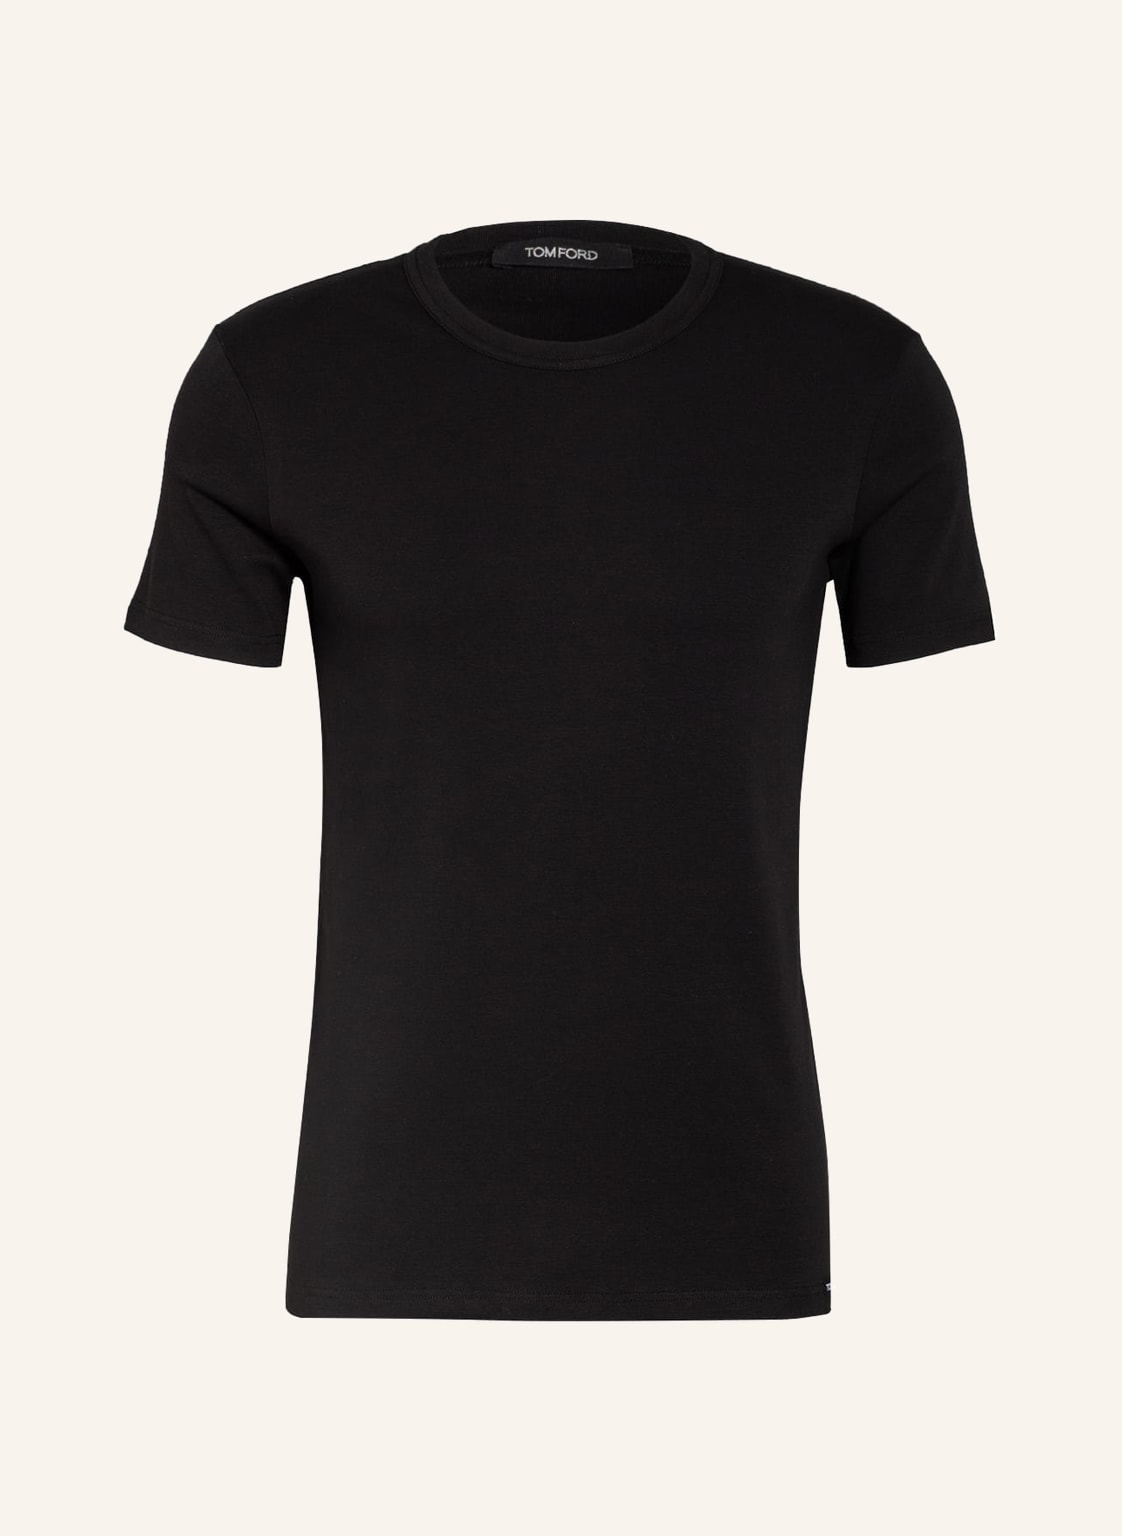 Tom Ford T-Shirt schwarz von Tom Ford